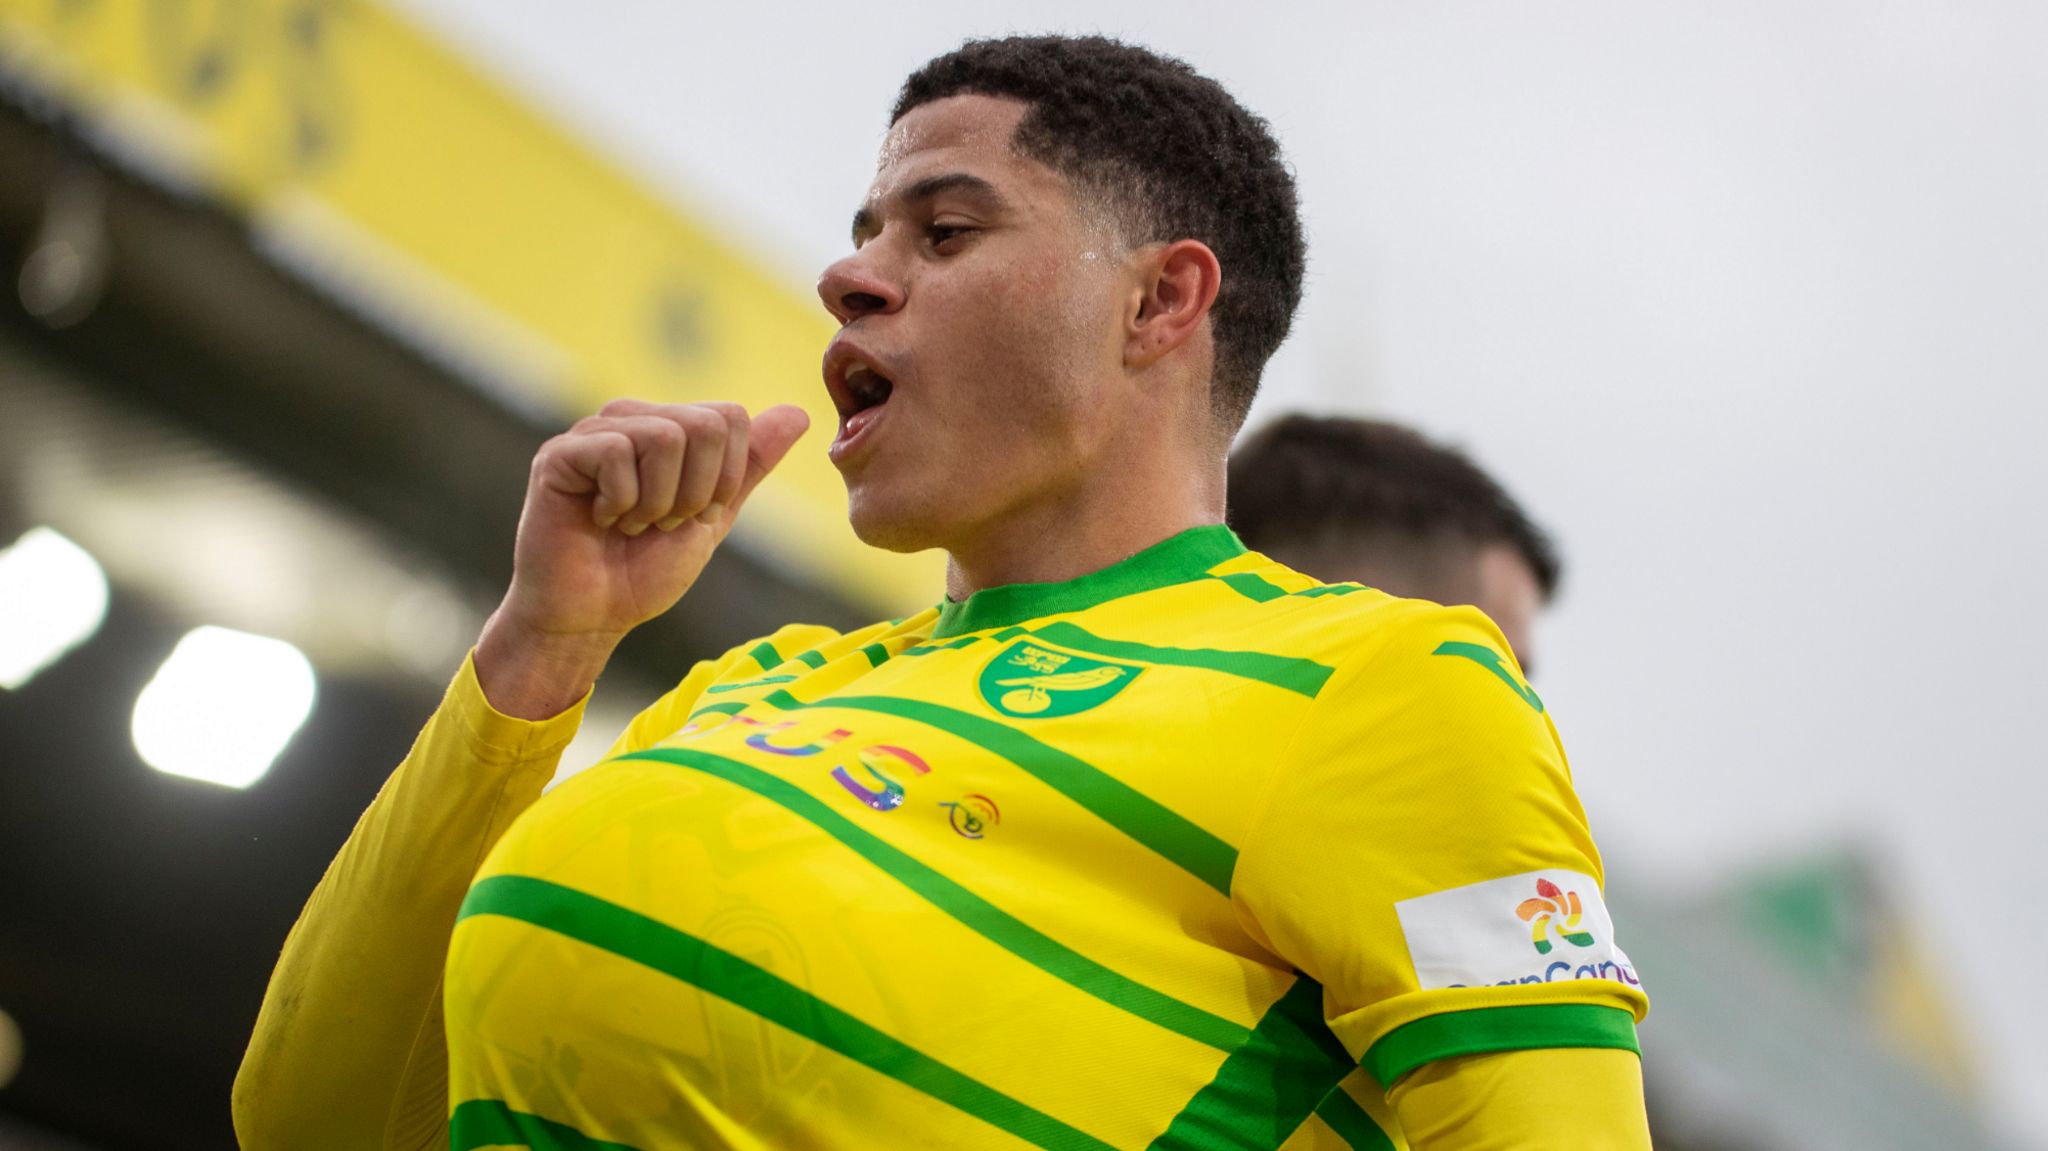 Norwich City's Gabriel Sara reveals reason behind celebration - BBC Sport